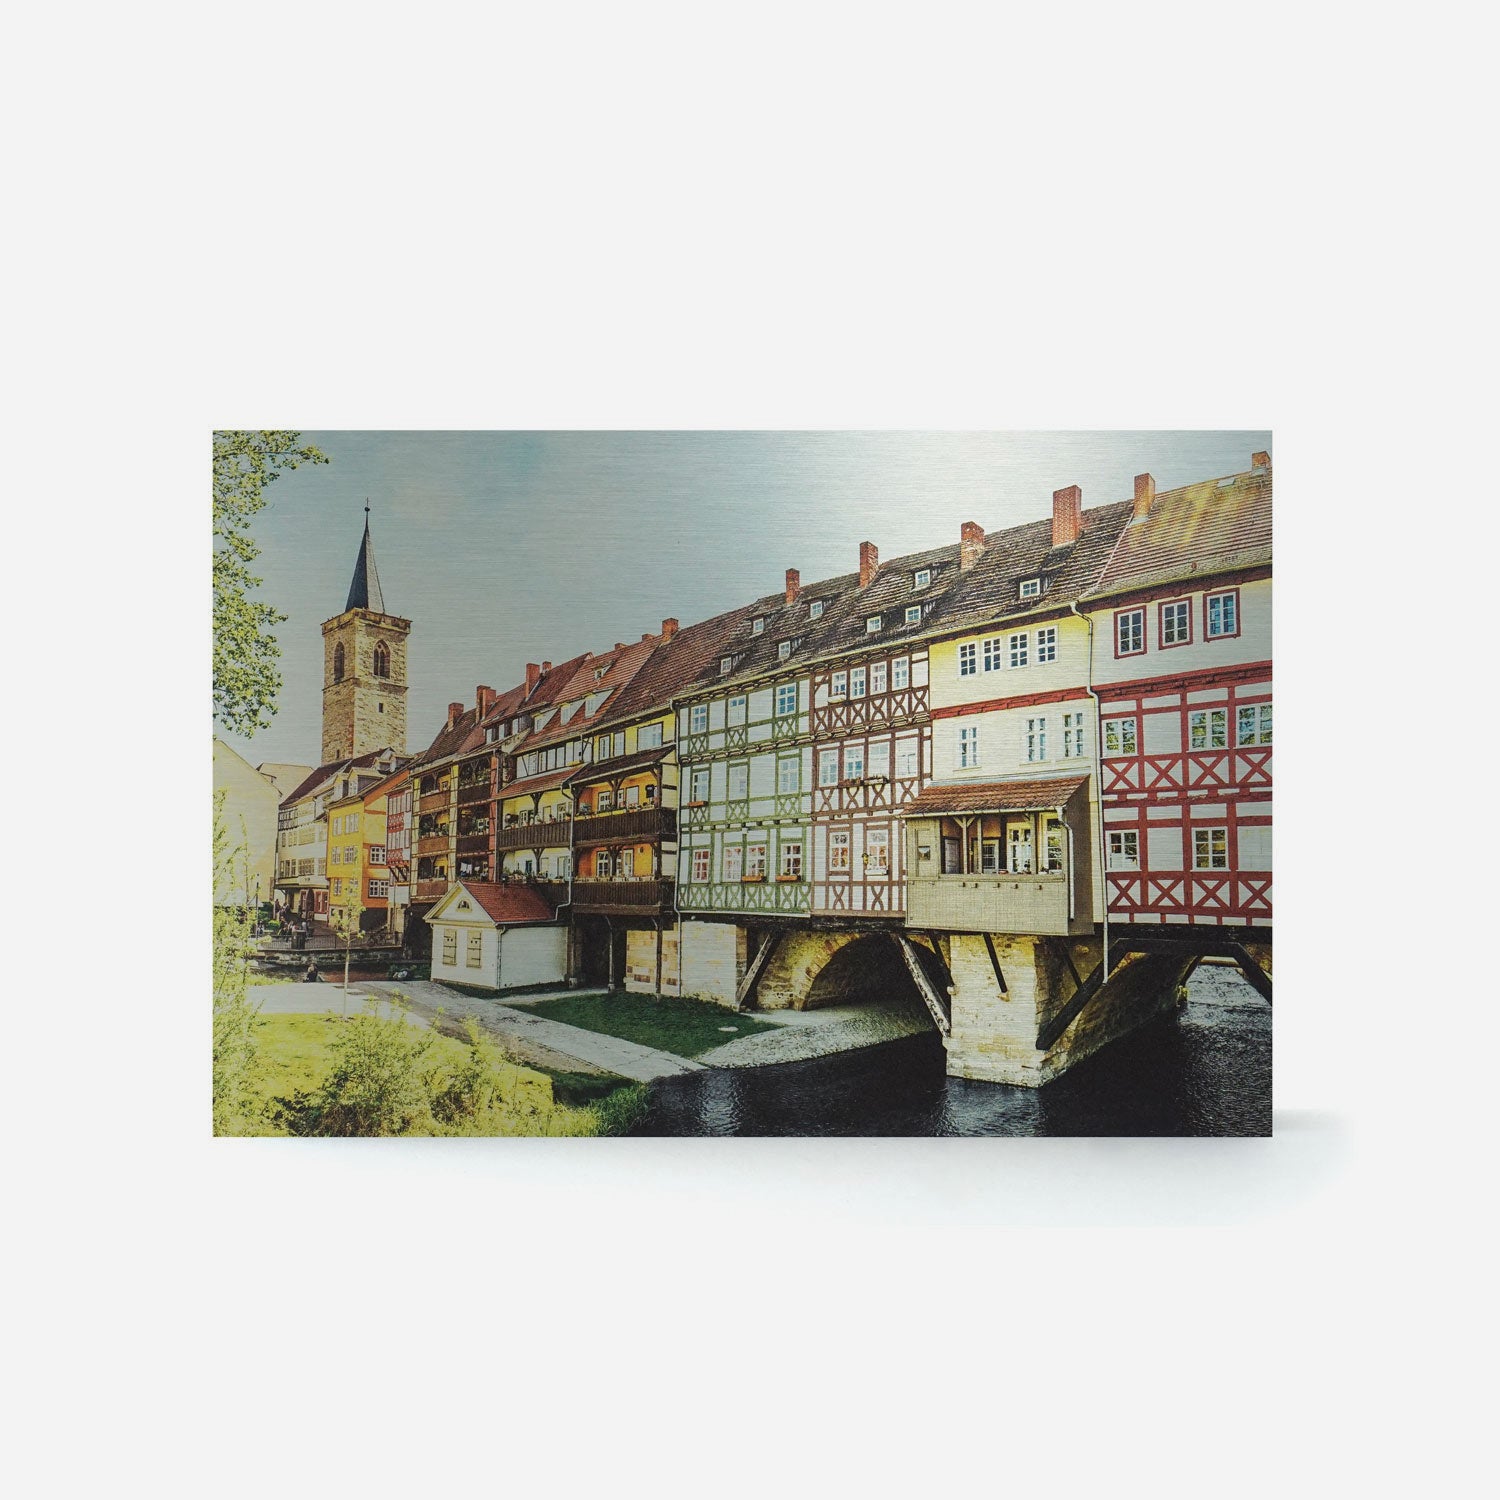 Wandbild Krämerbrücke 13 x 18 cm - Metalldruck mit und ohne Rahmen